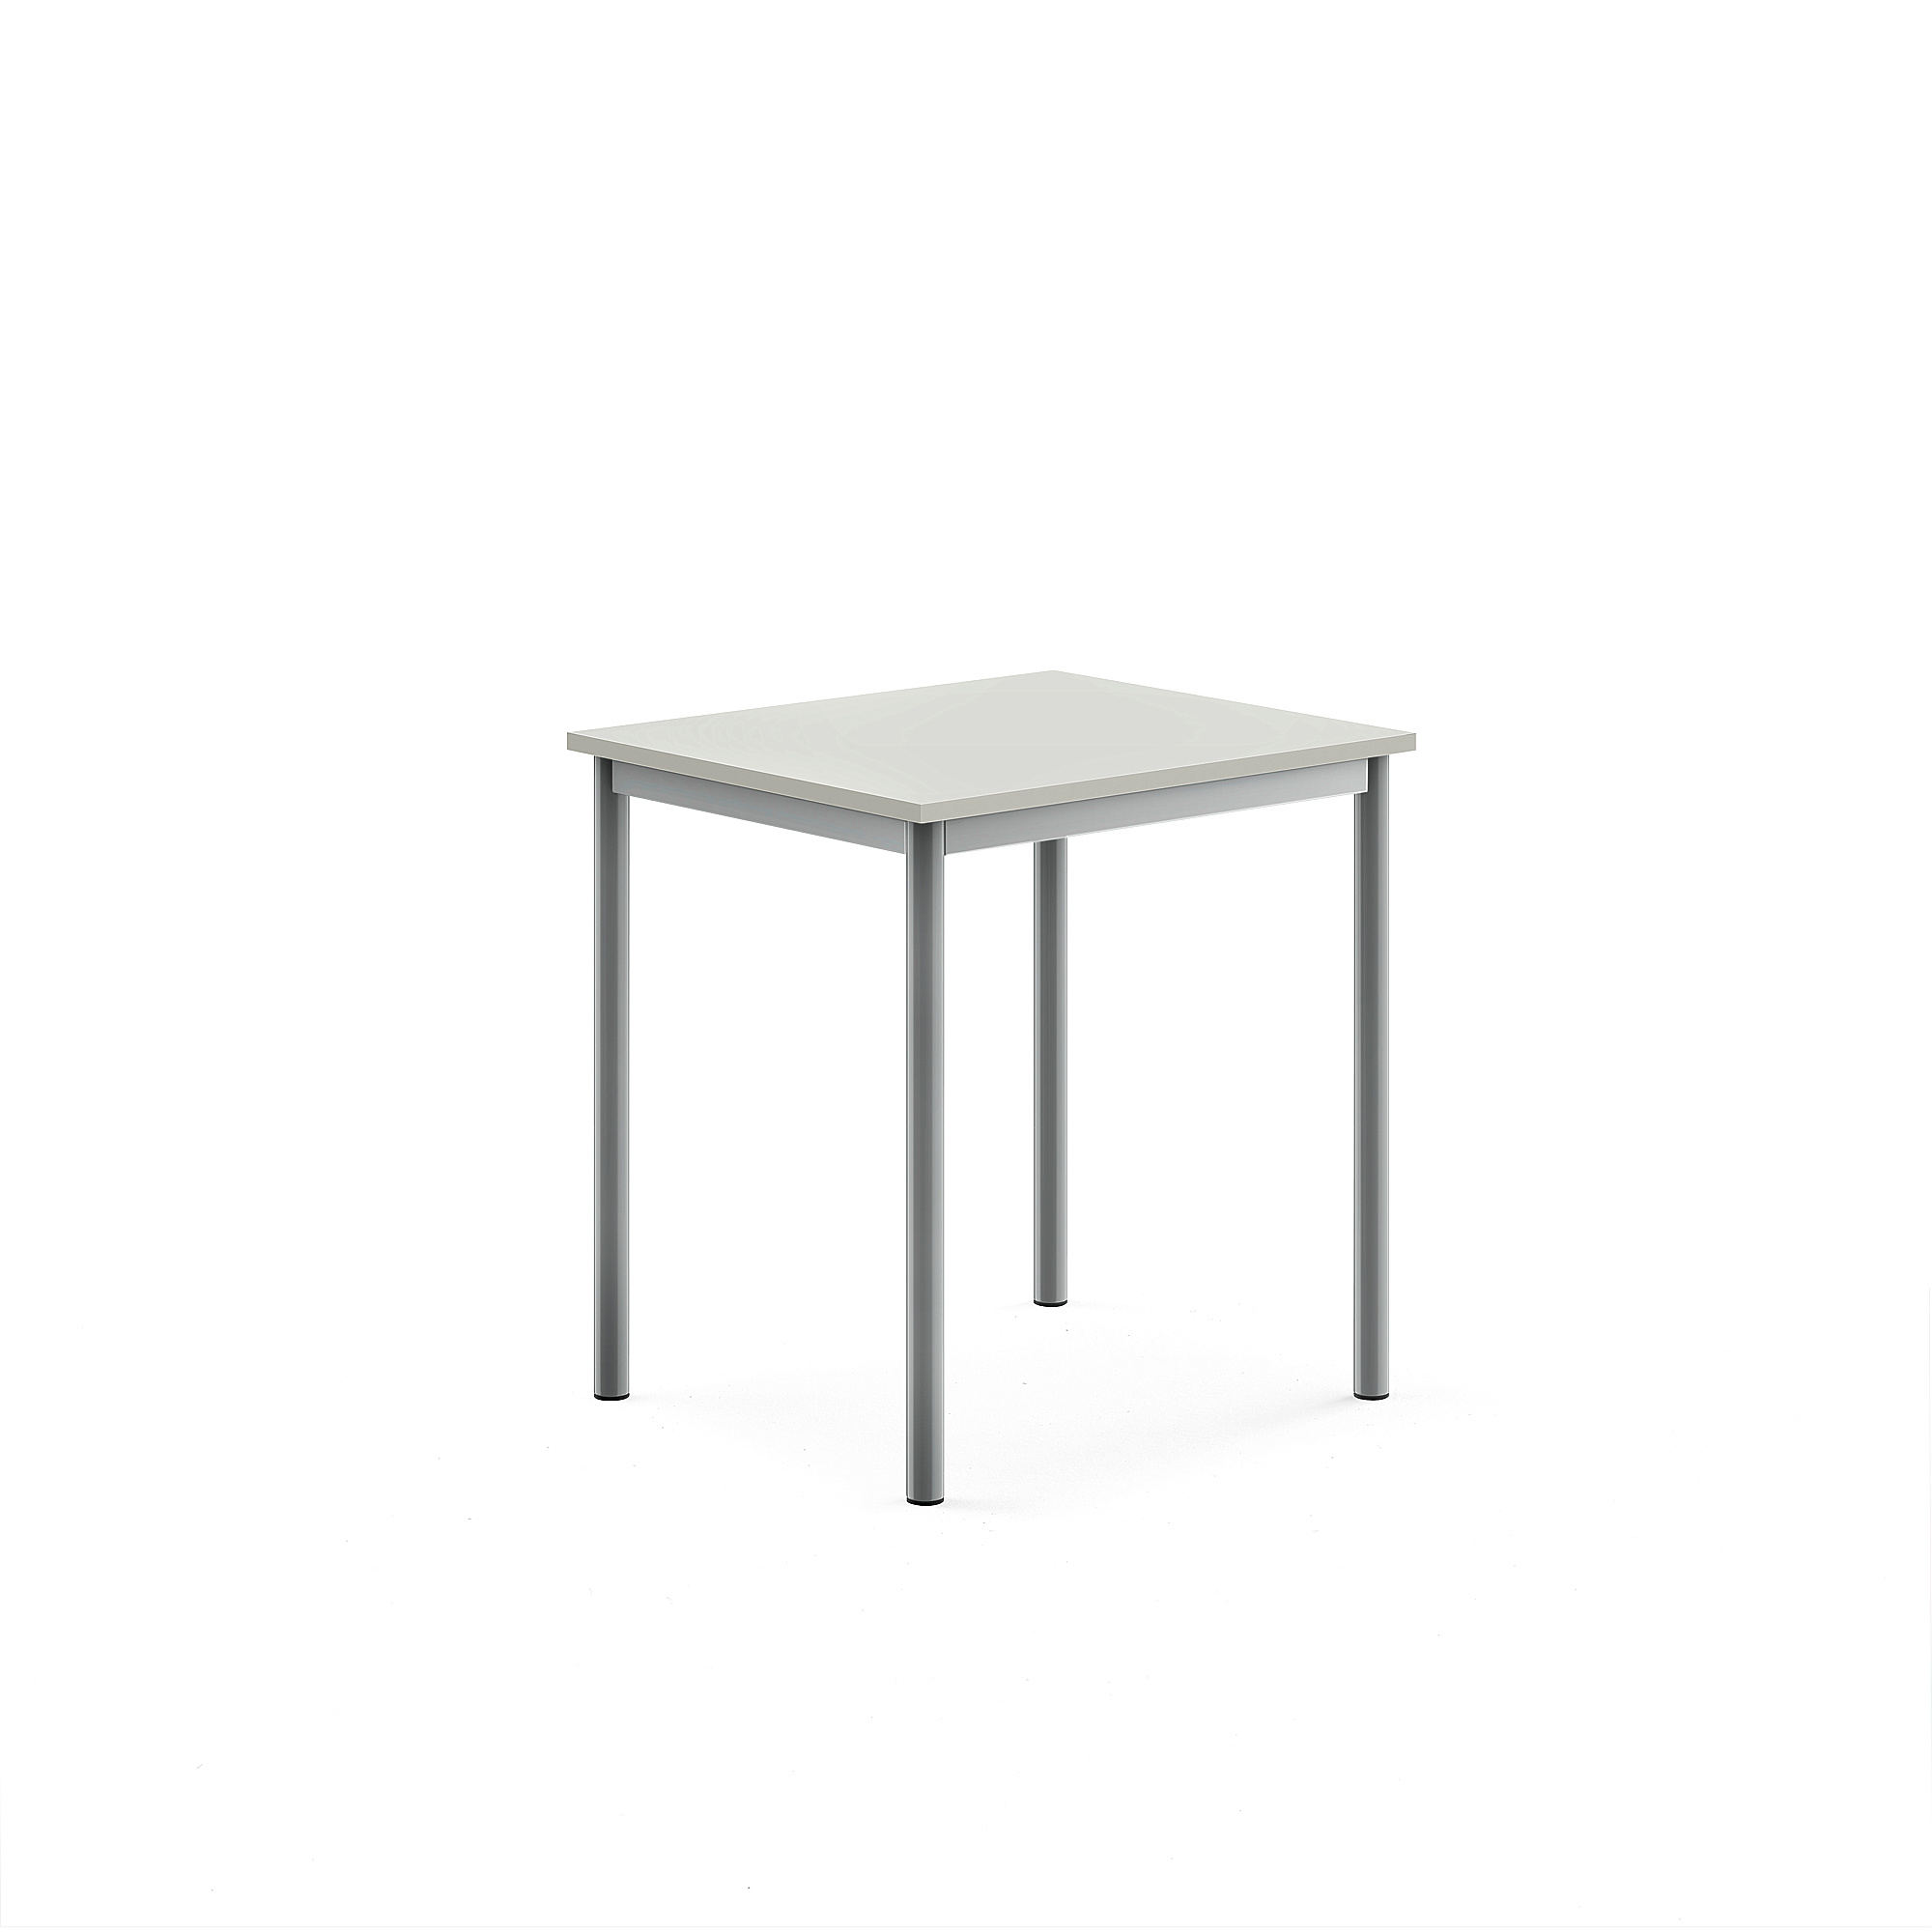 Stůl SONITUS, 700x600x720 mm, stříbrné nohy, HPL deska tlumící hluk, šedá